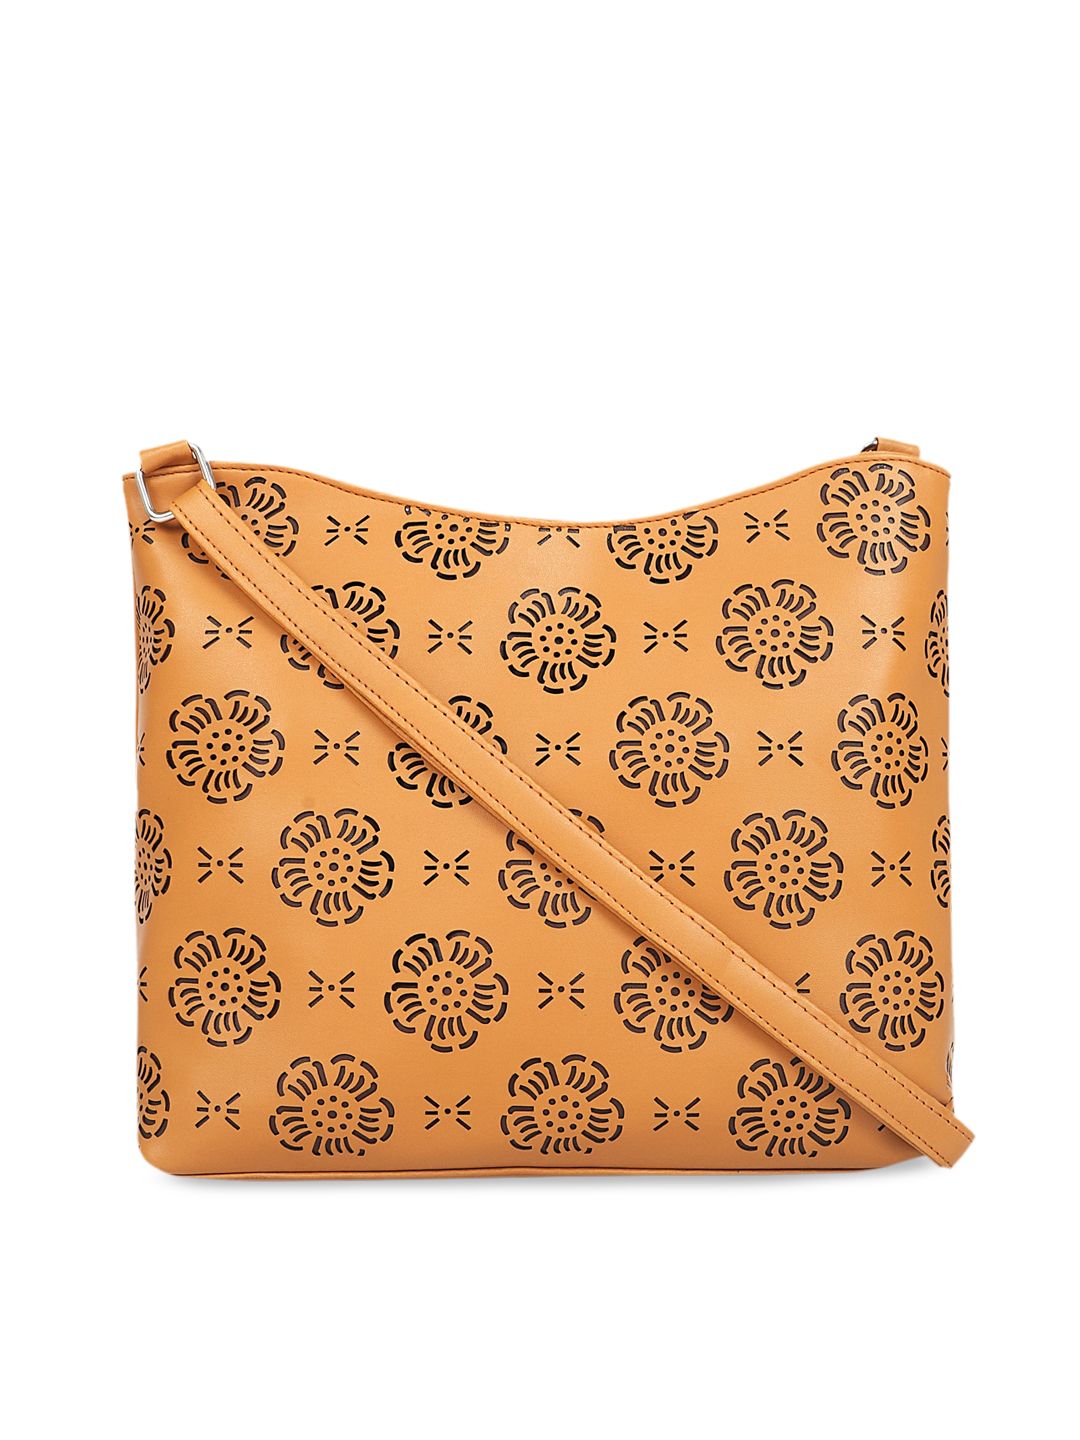 Toteteca Tan Solid Sling Bag Price in India